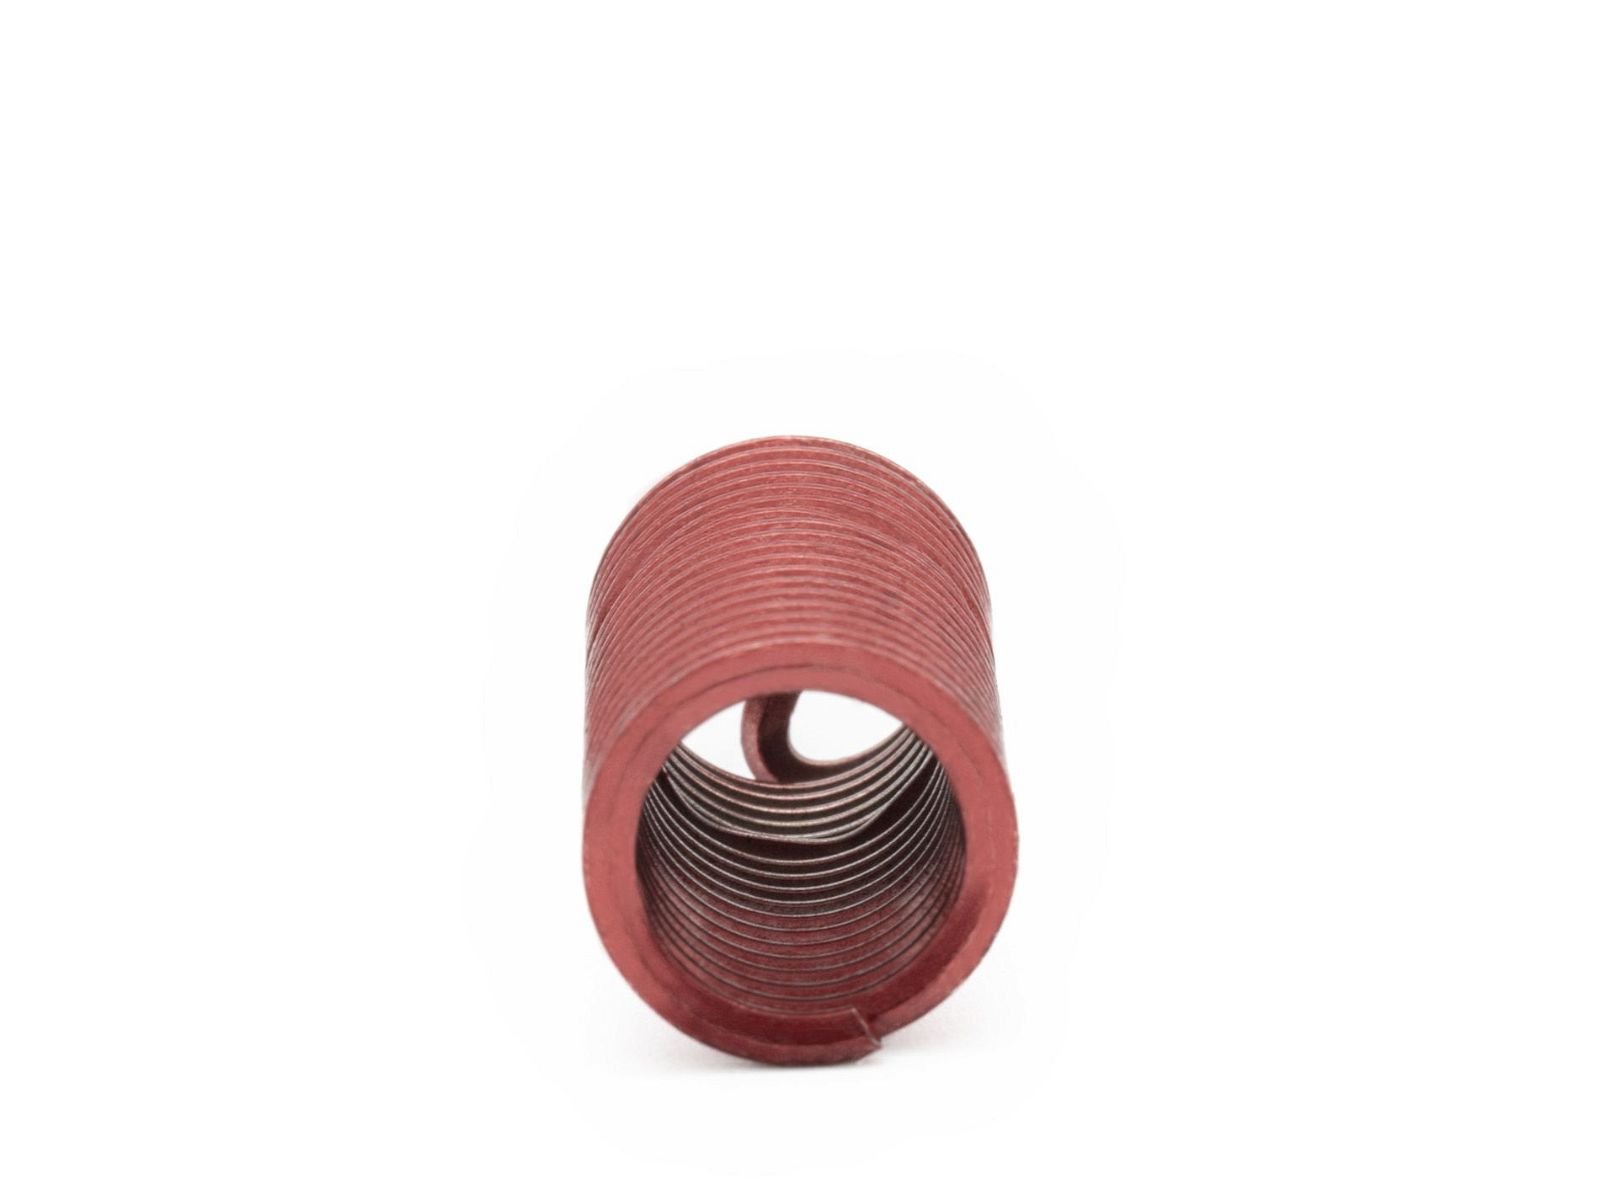 BaerCoil Drahtgewindeeinsätze BSW 1/4 x 20 - 3,0 D (19,05 mm) - screw grip (schraubensichernd) - 100 Stück